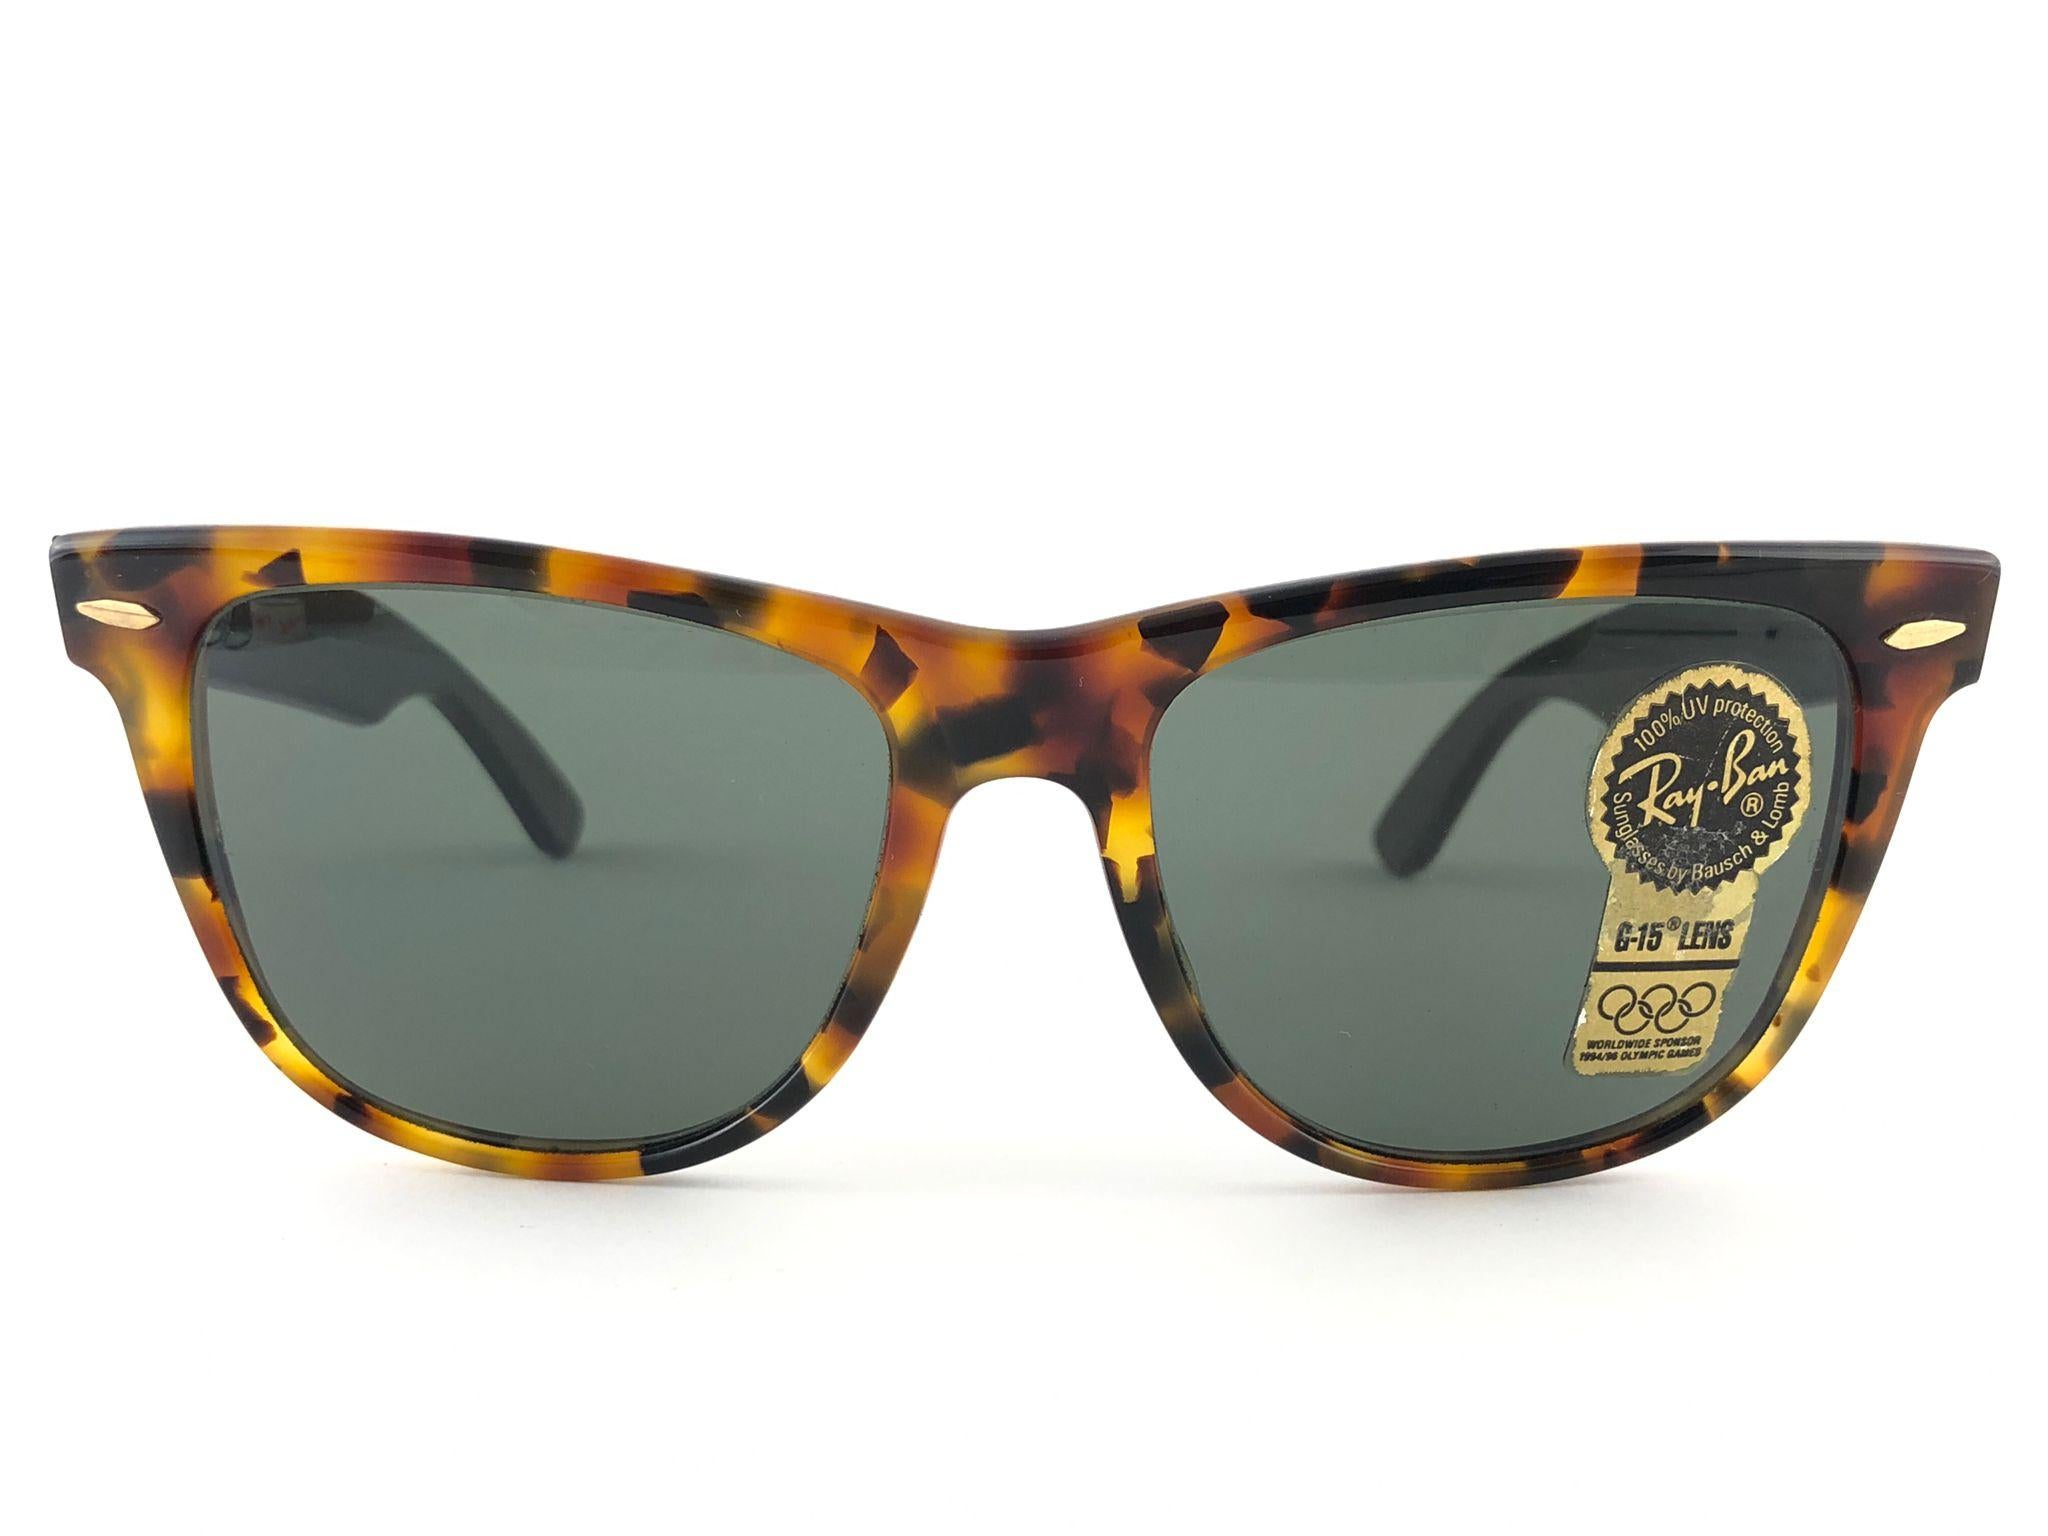 New Ray Ban The Wayfarer II Tortoise G15 Grey Lenses USA 80's Sunglasses 5